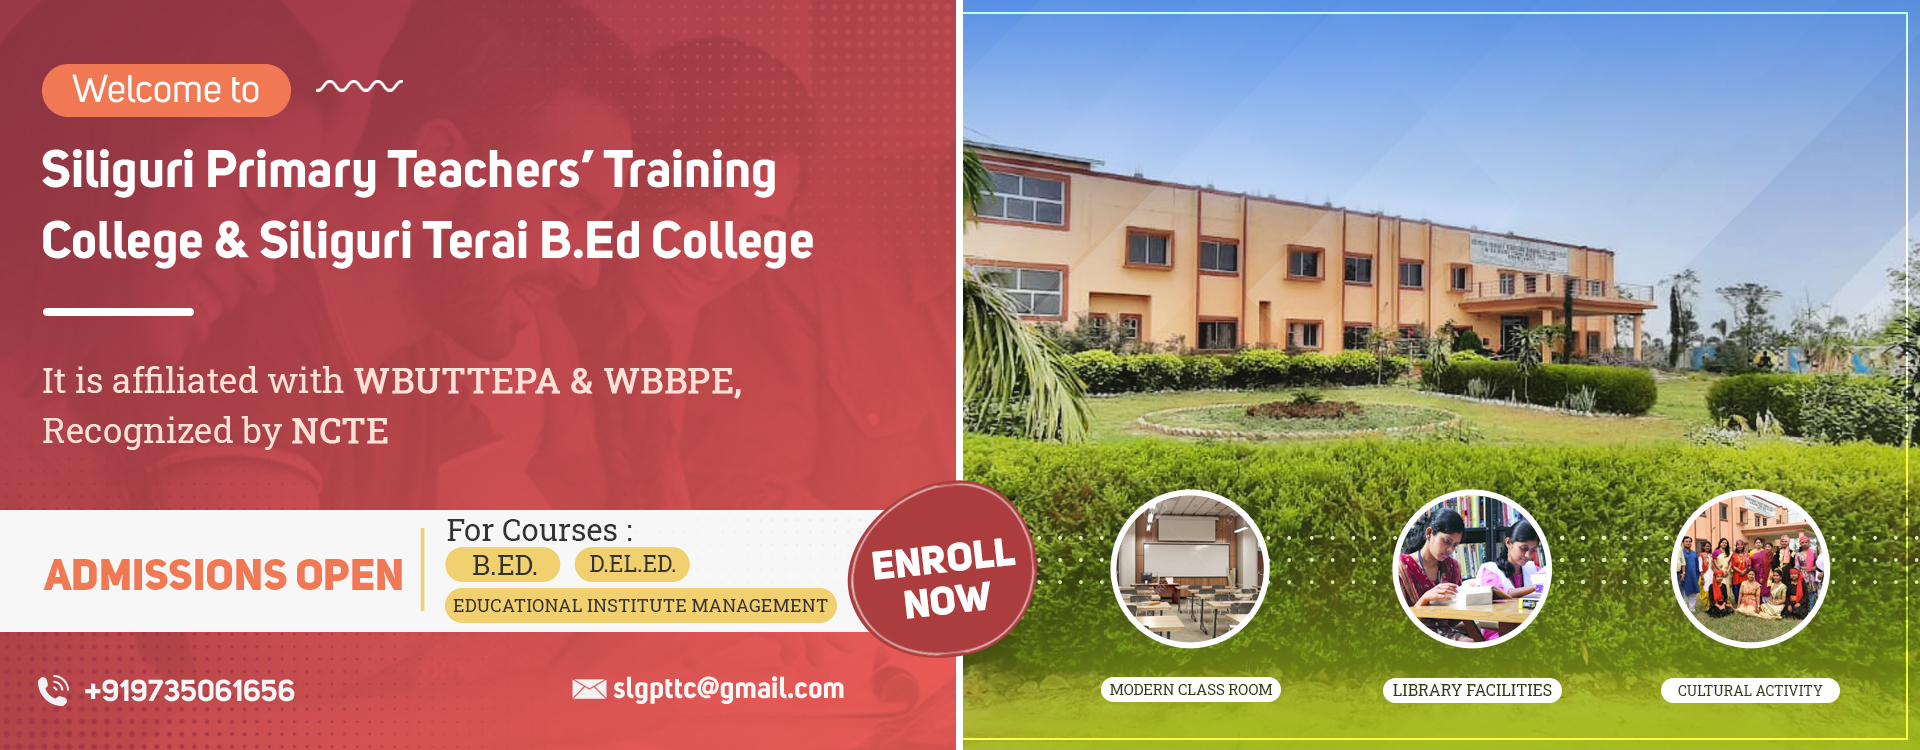 Siliguri Primary Teacher's Training College & Siliguri Terai B.Ed College